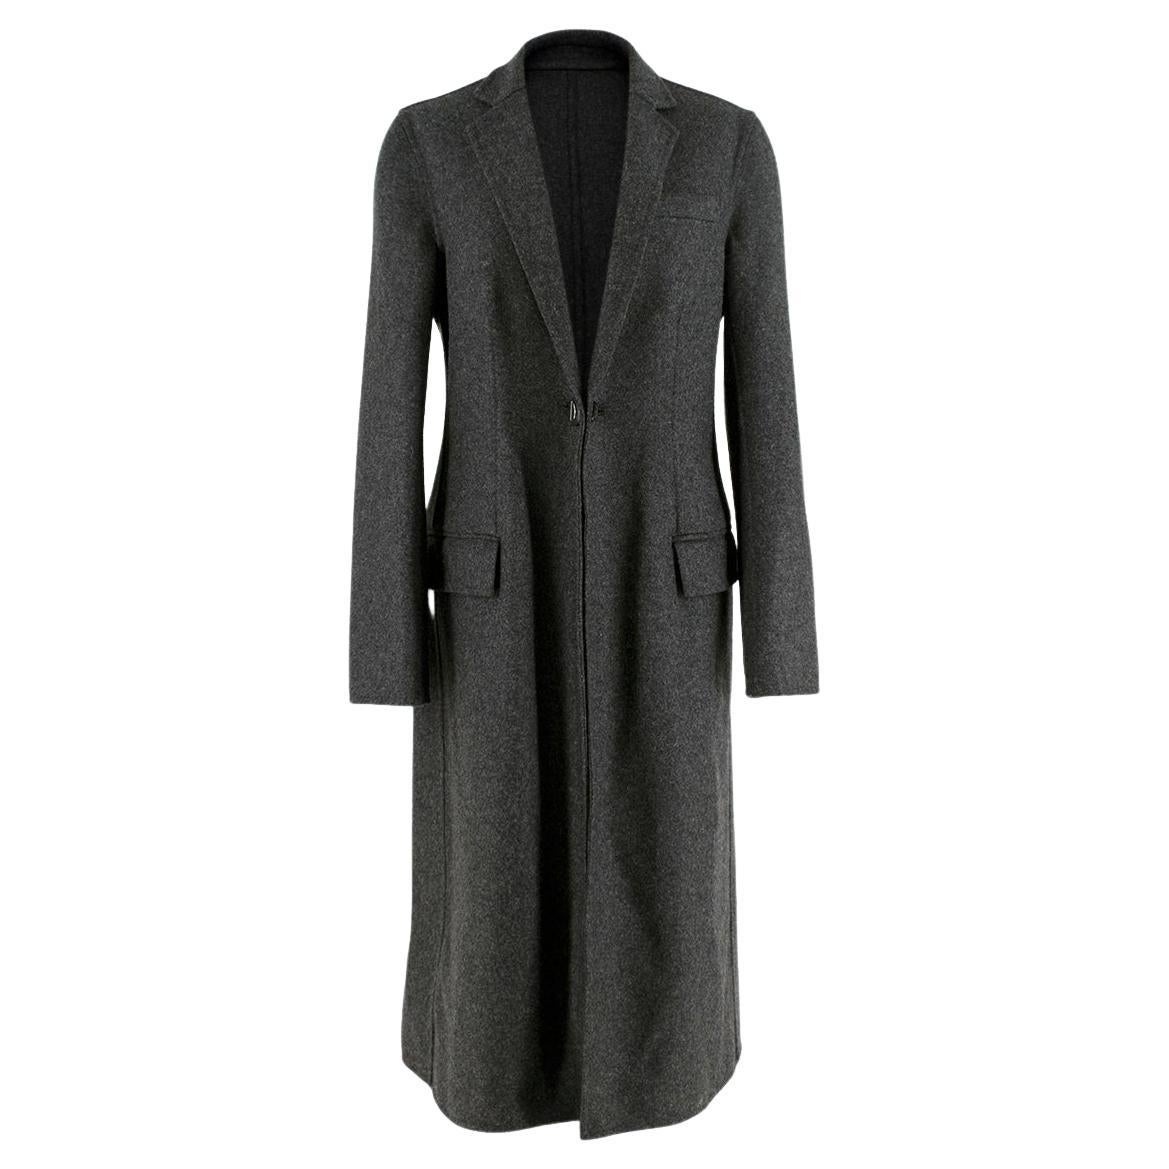 Marni Charcoal Grey Double Faced Wool Blend Felt Coat - US 4